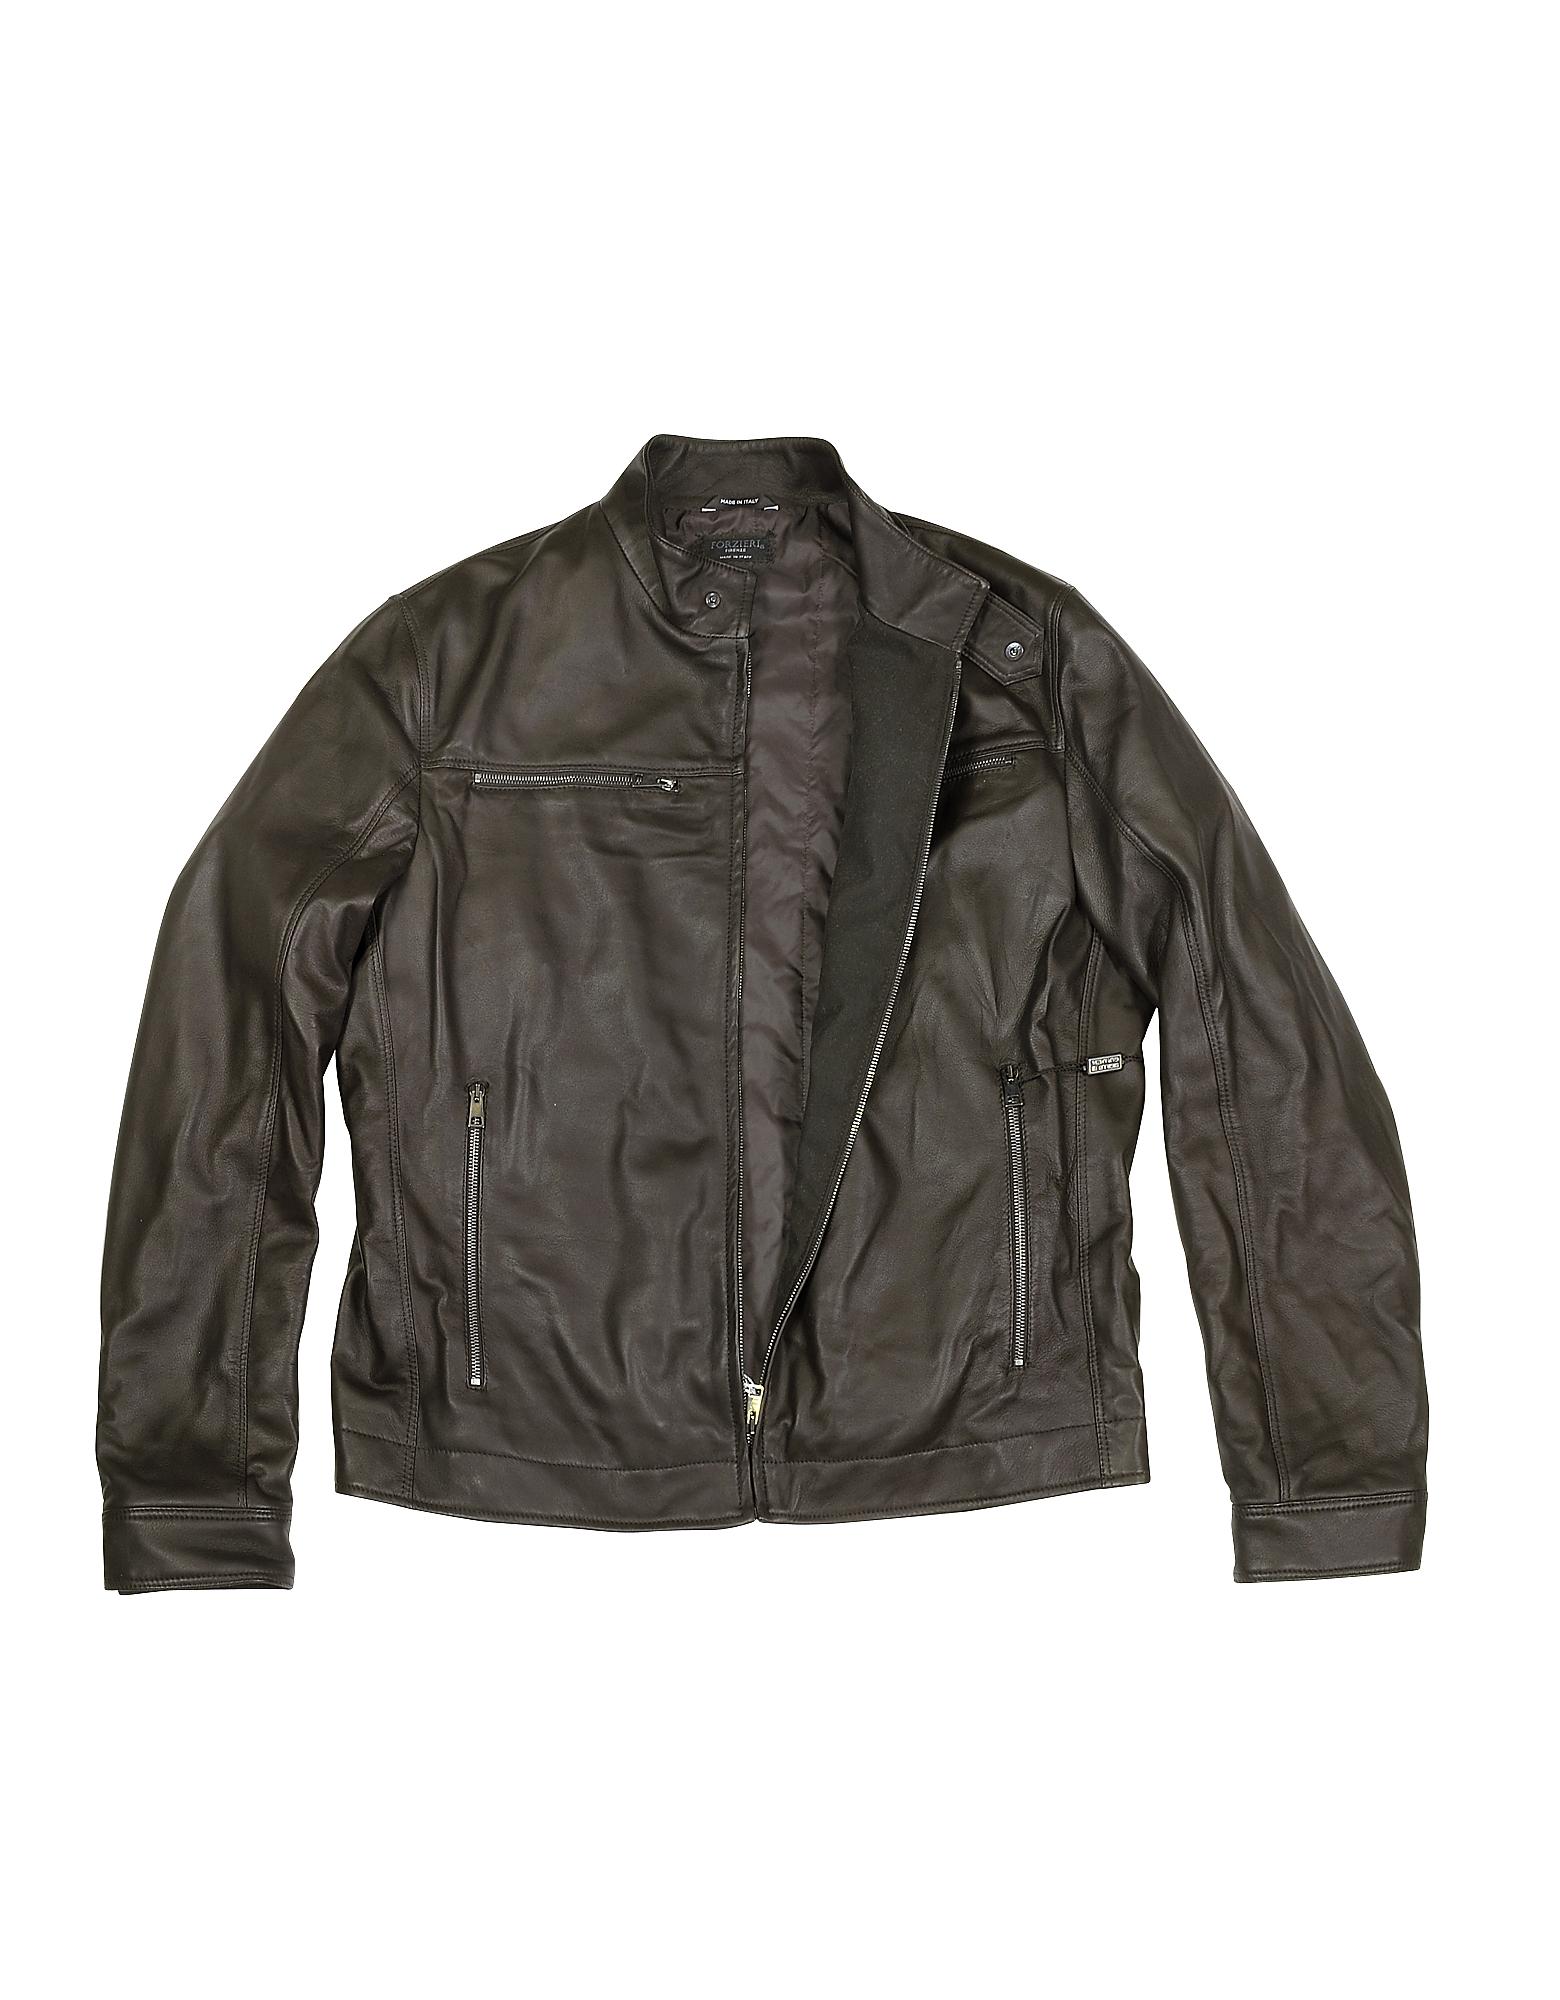 Lyst - Forzieri Men's Dark Brown Leather Motorcycle Jacket in Brown for Men